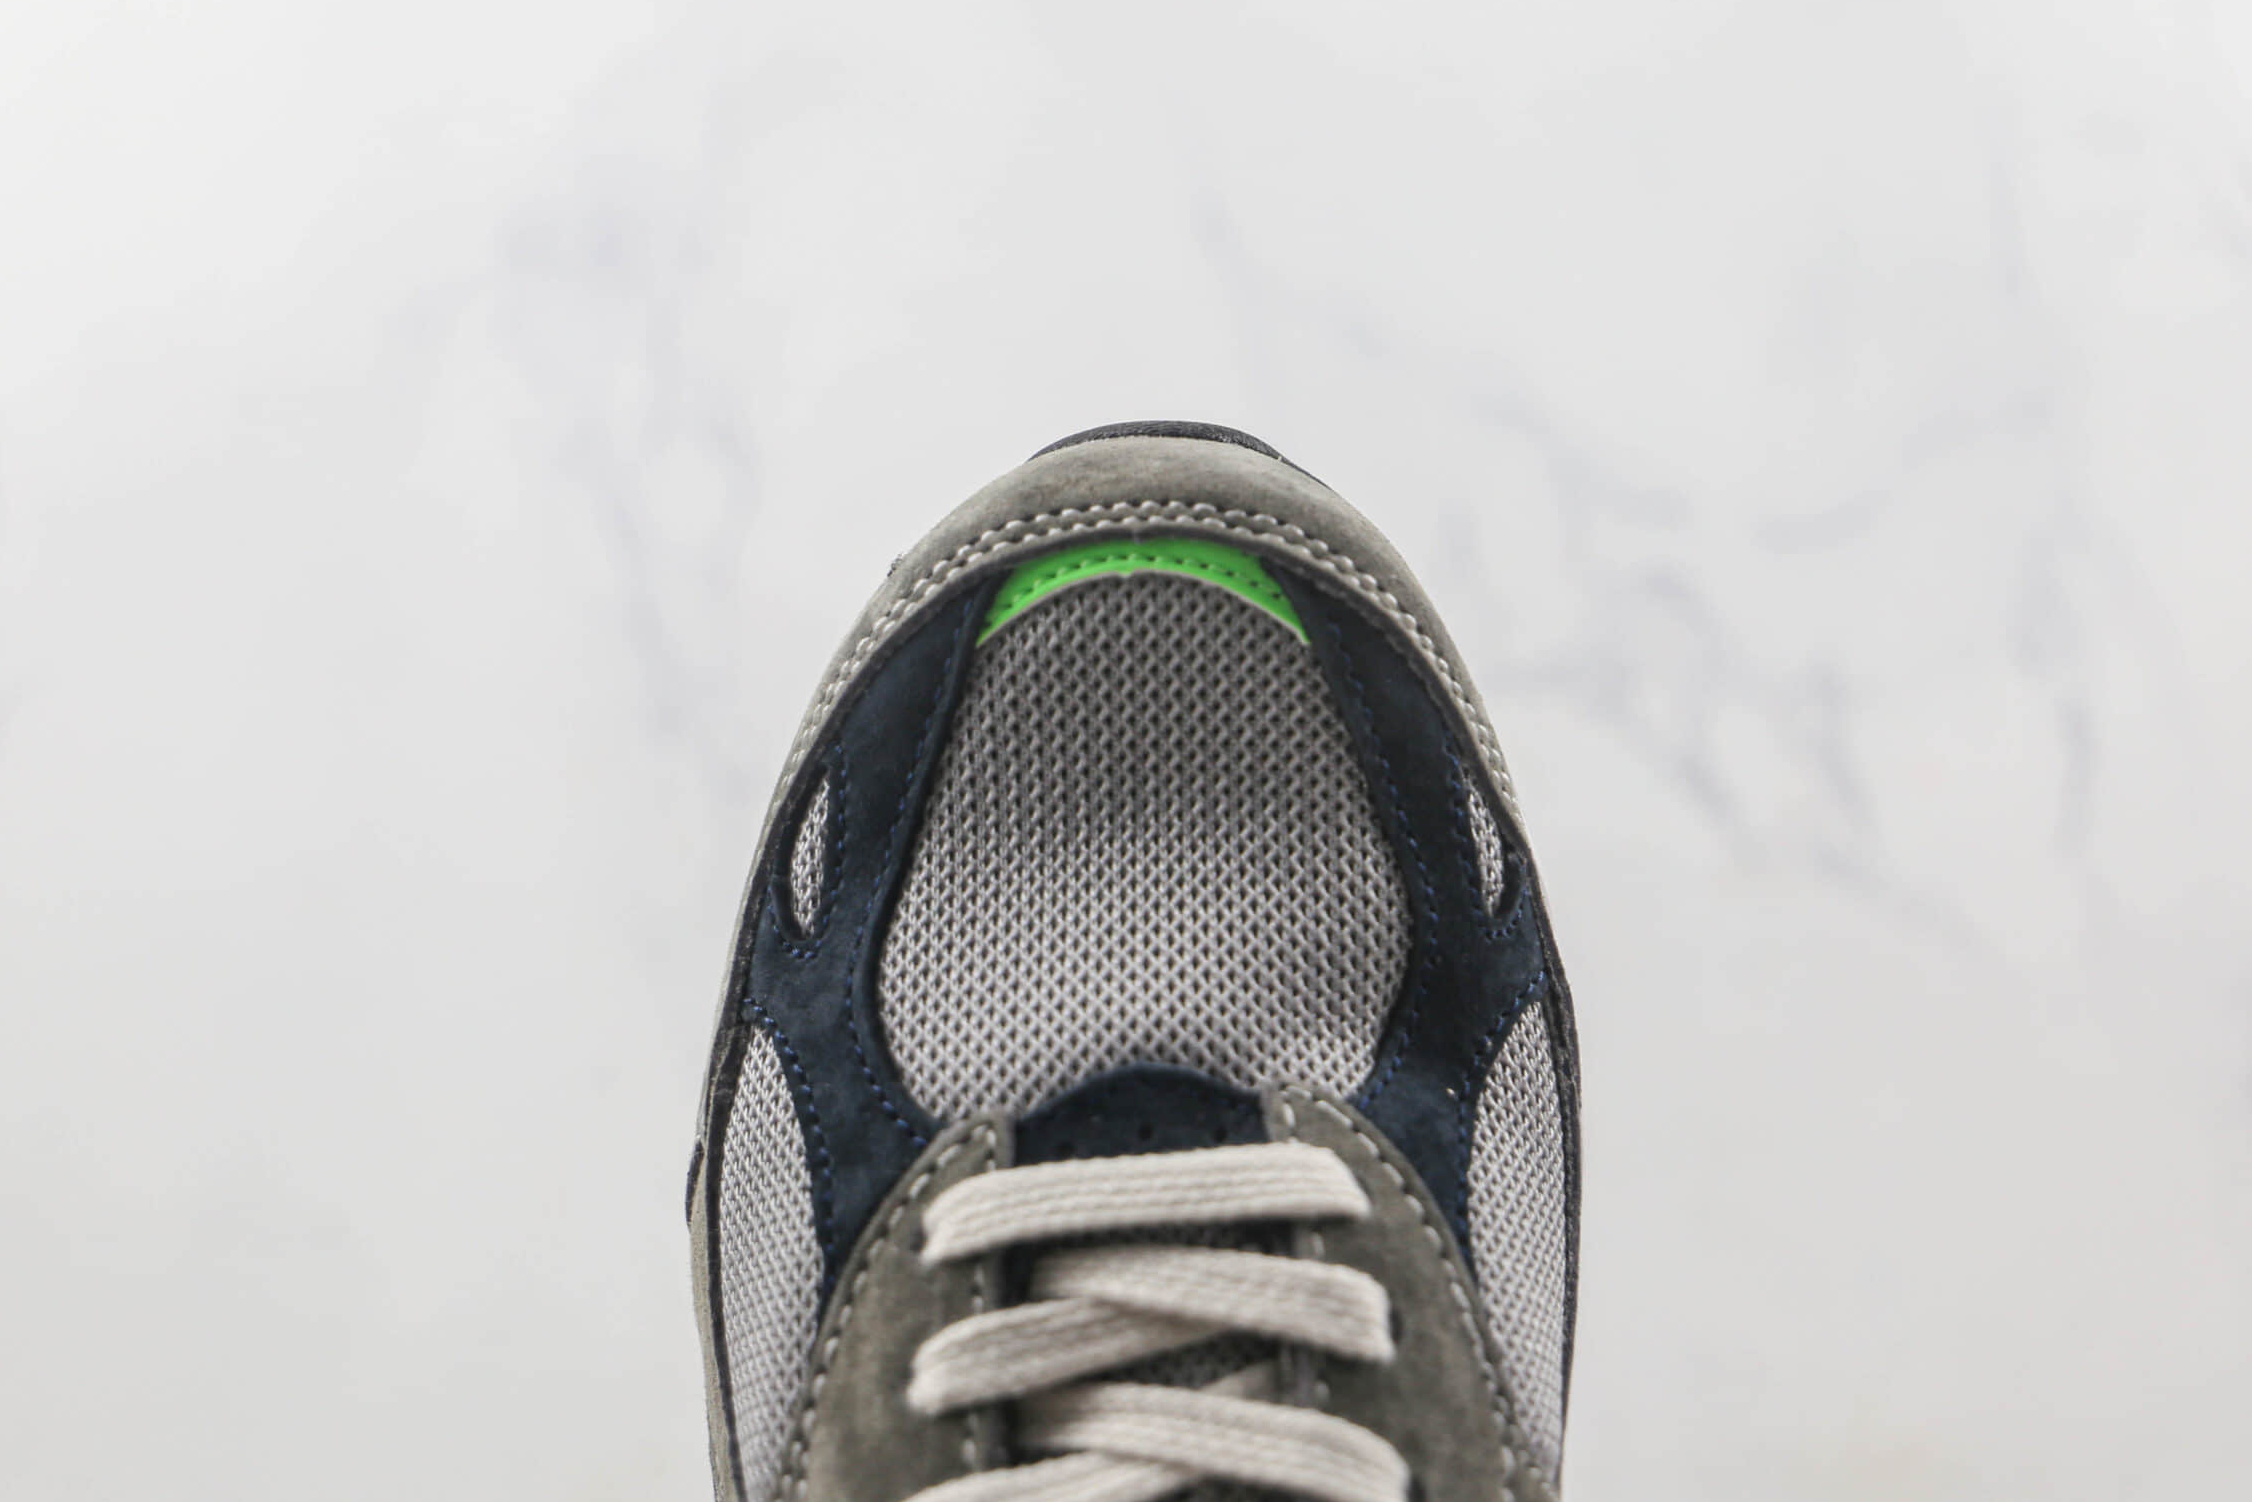 New Balance 990V3 US9D - Black Grey White Stylish Sneakers